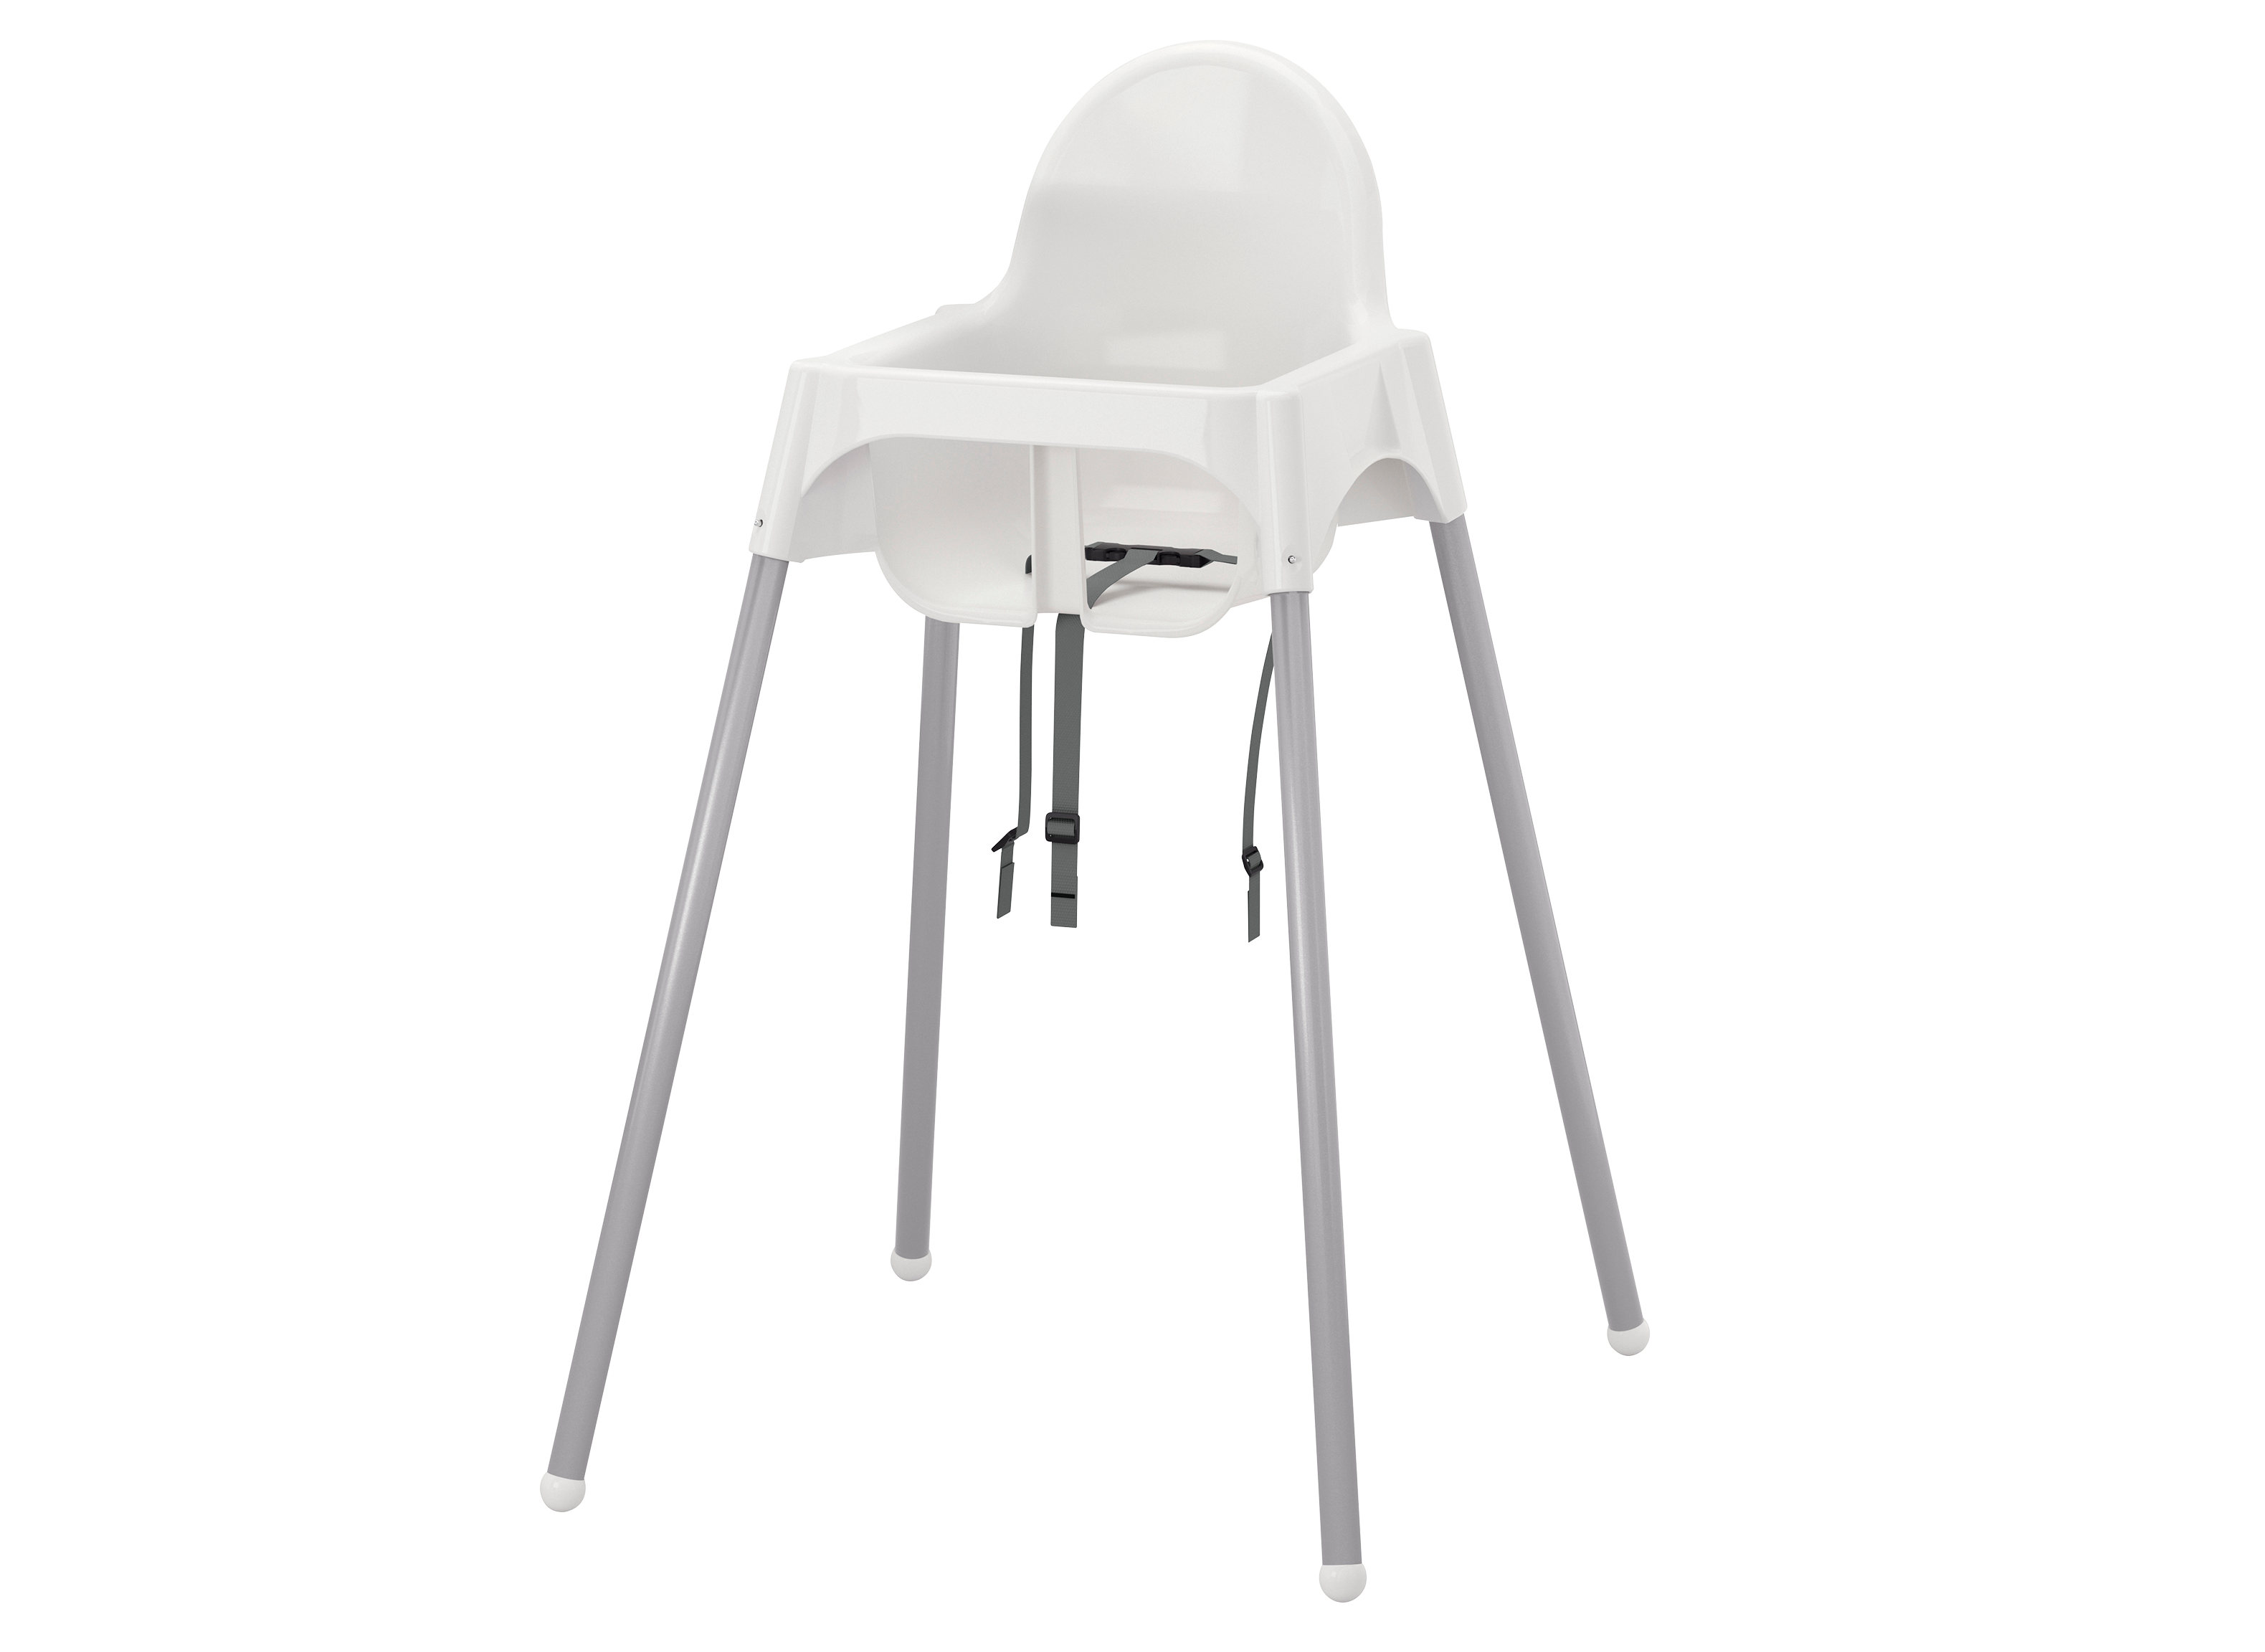 IKEA Antilop high chair review • Alexa at Home